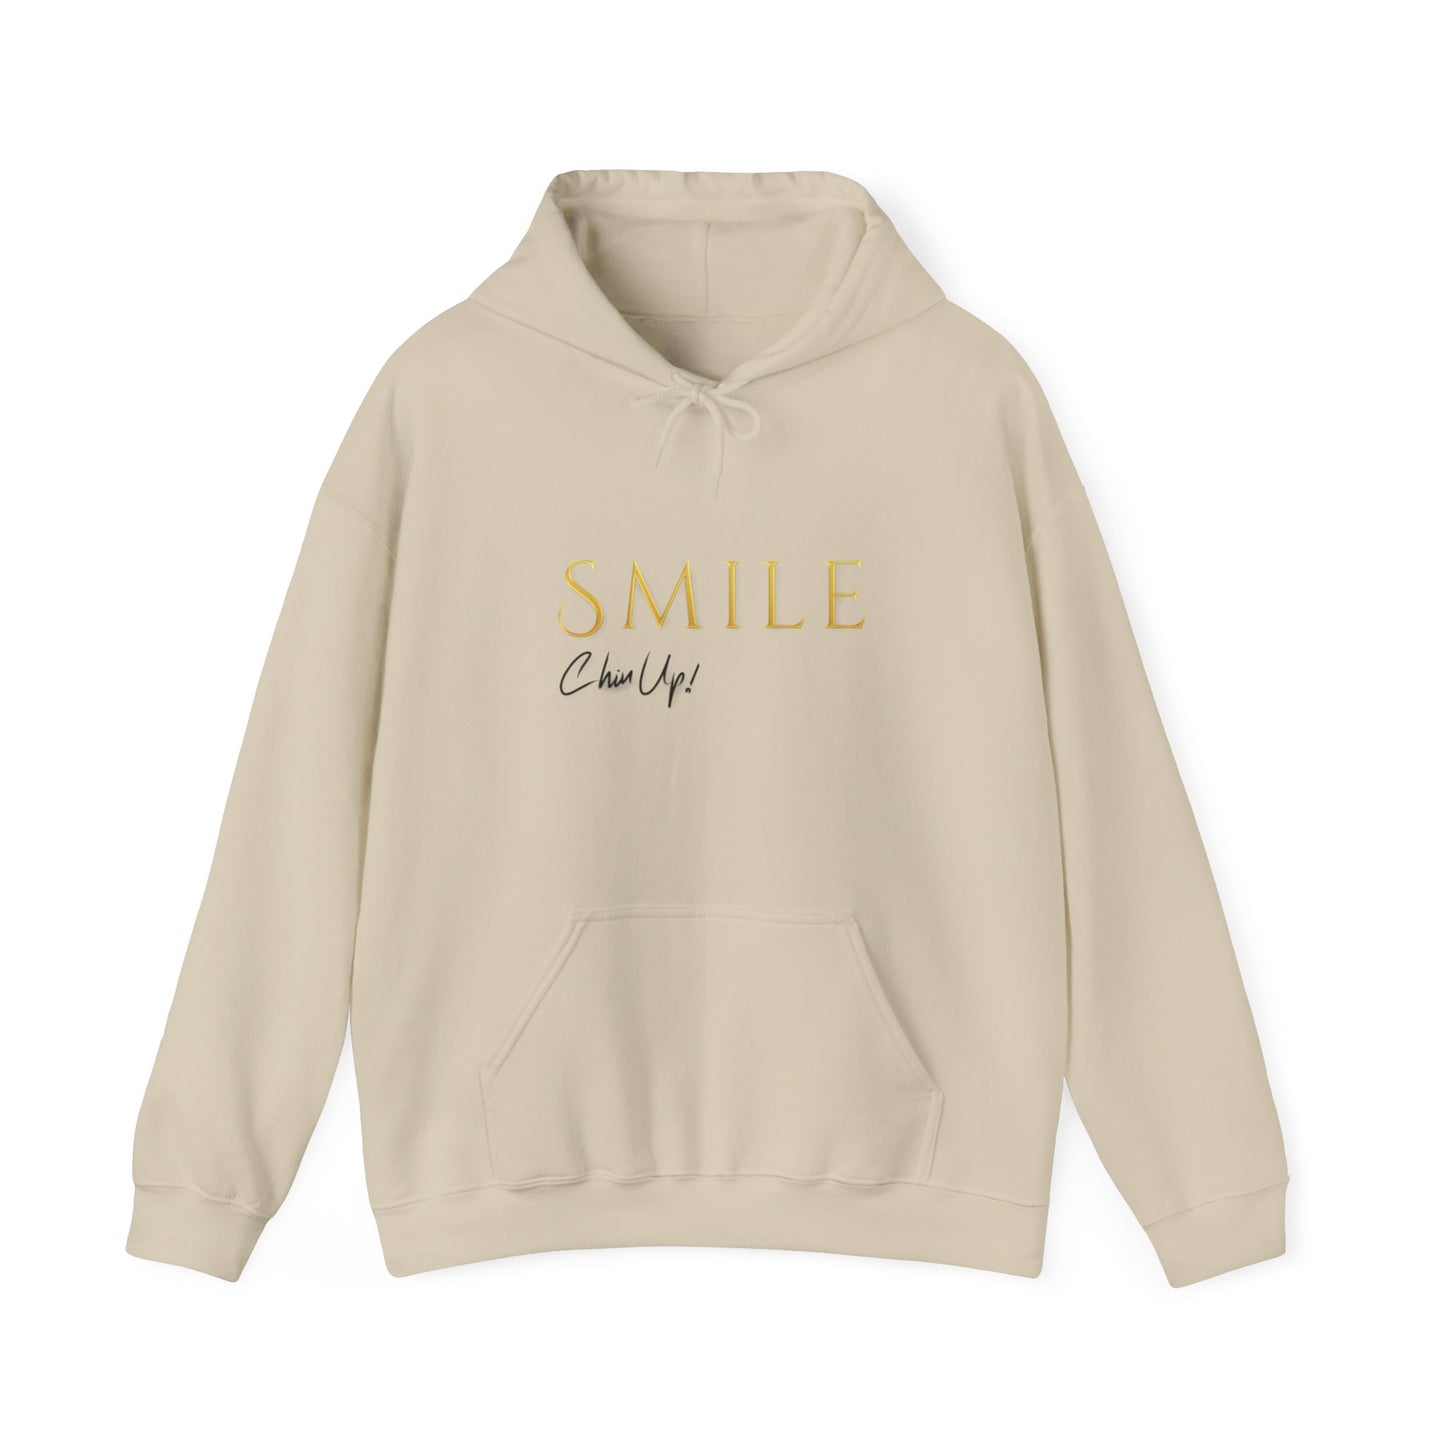 SMILE, Chin Up! Hooded Sweatshirt